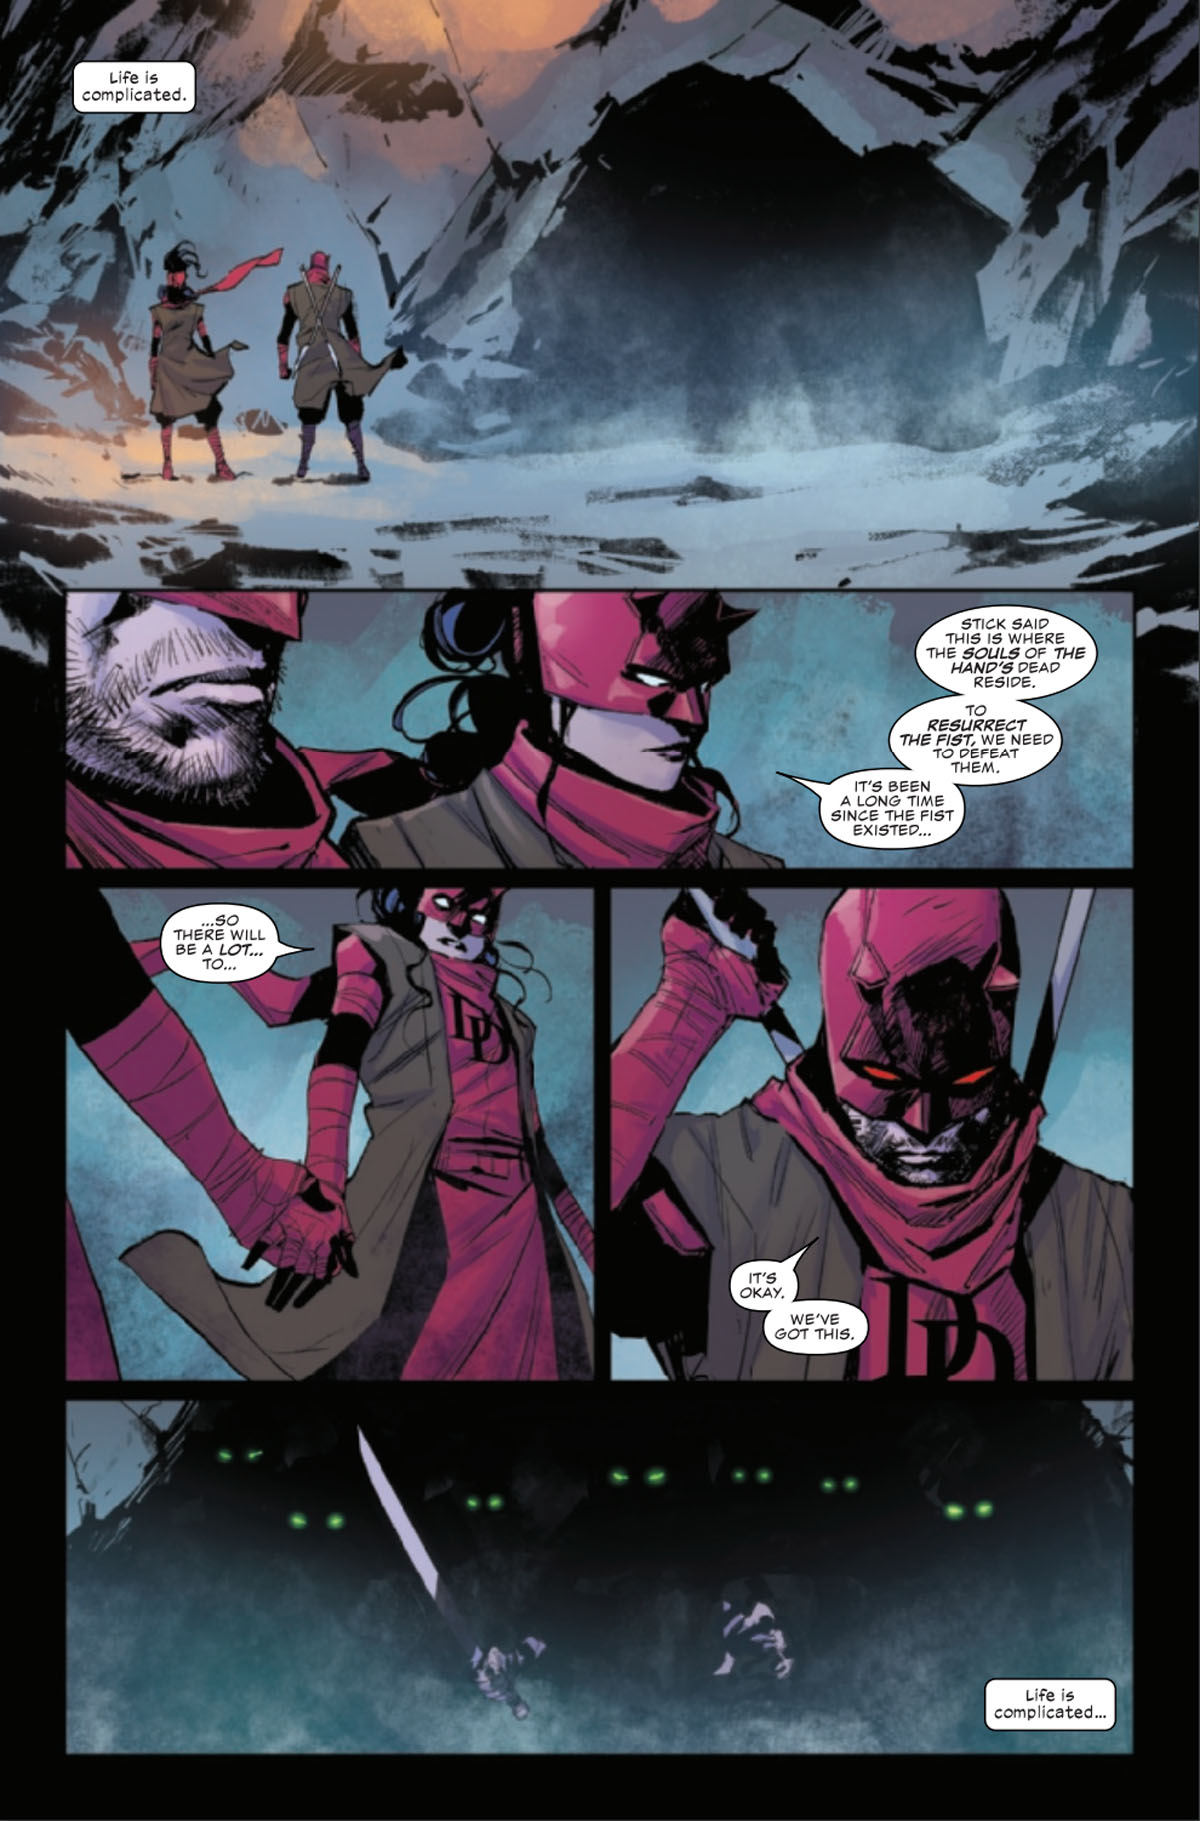 Daredevil #4 page 2